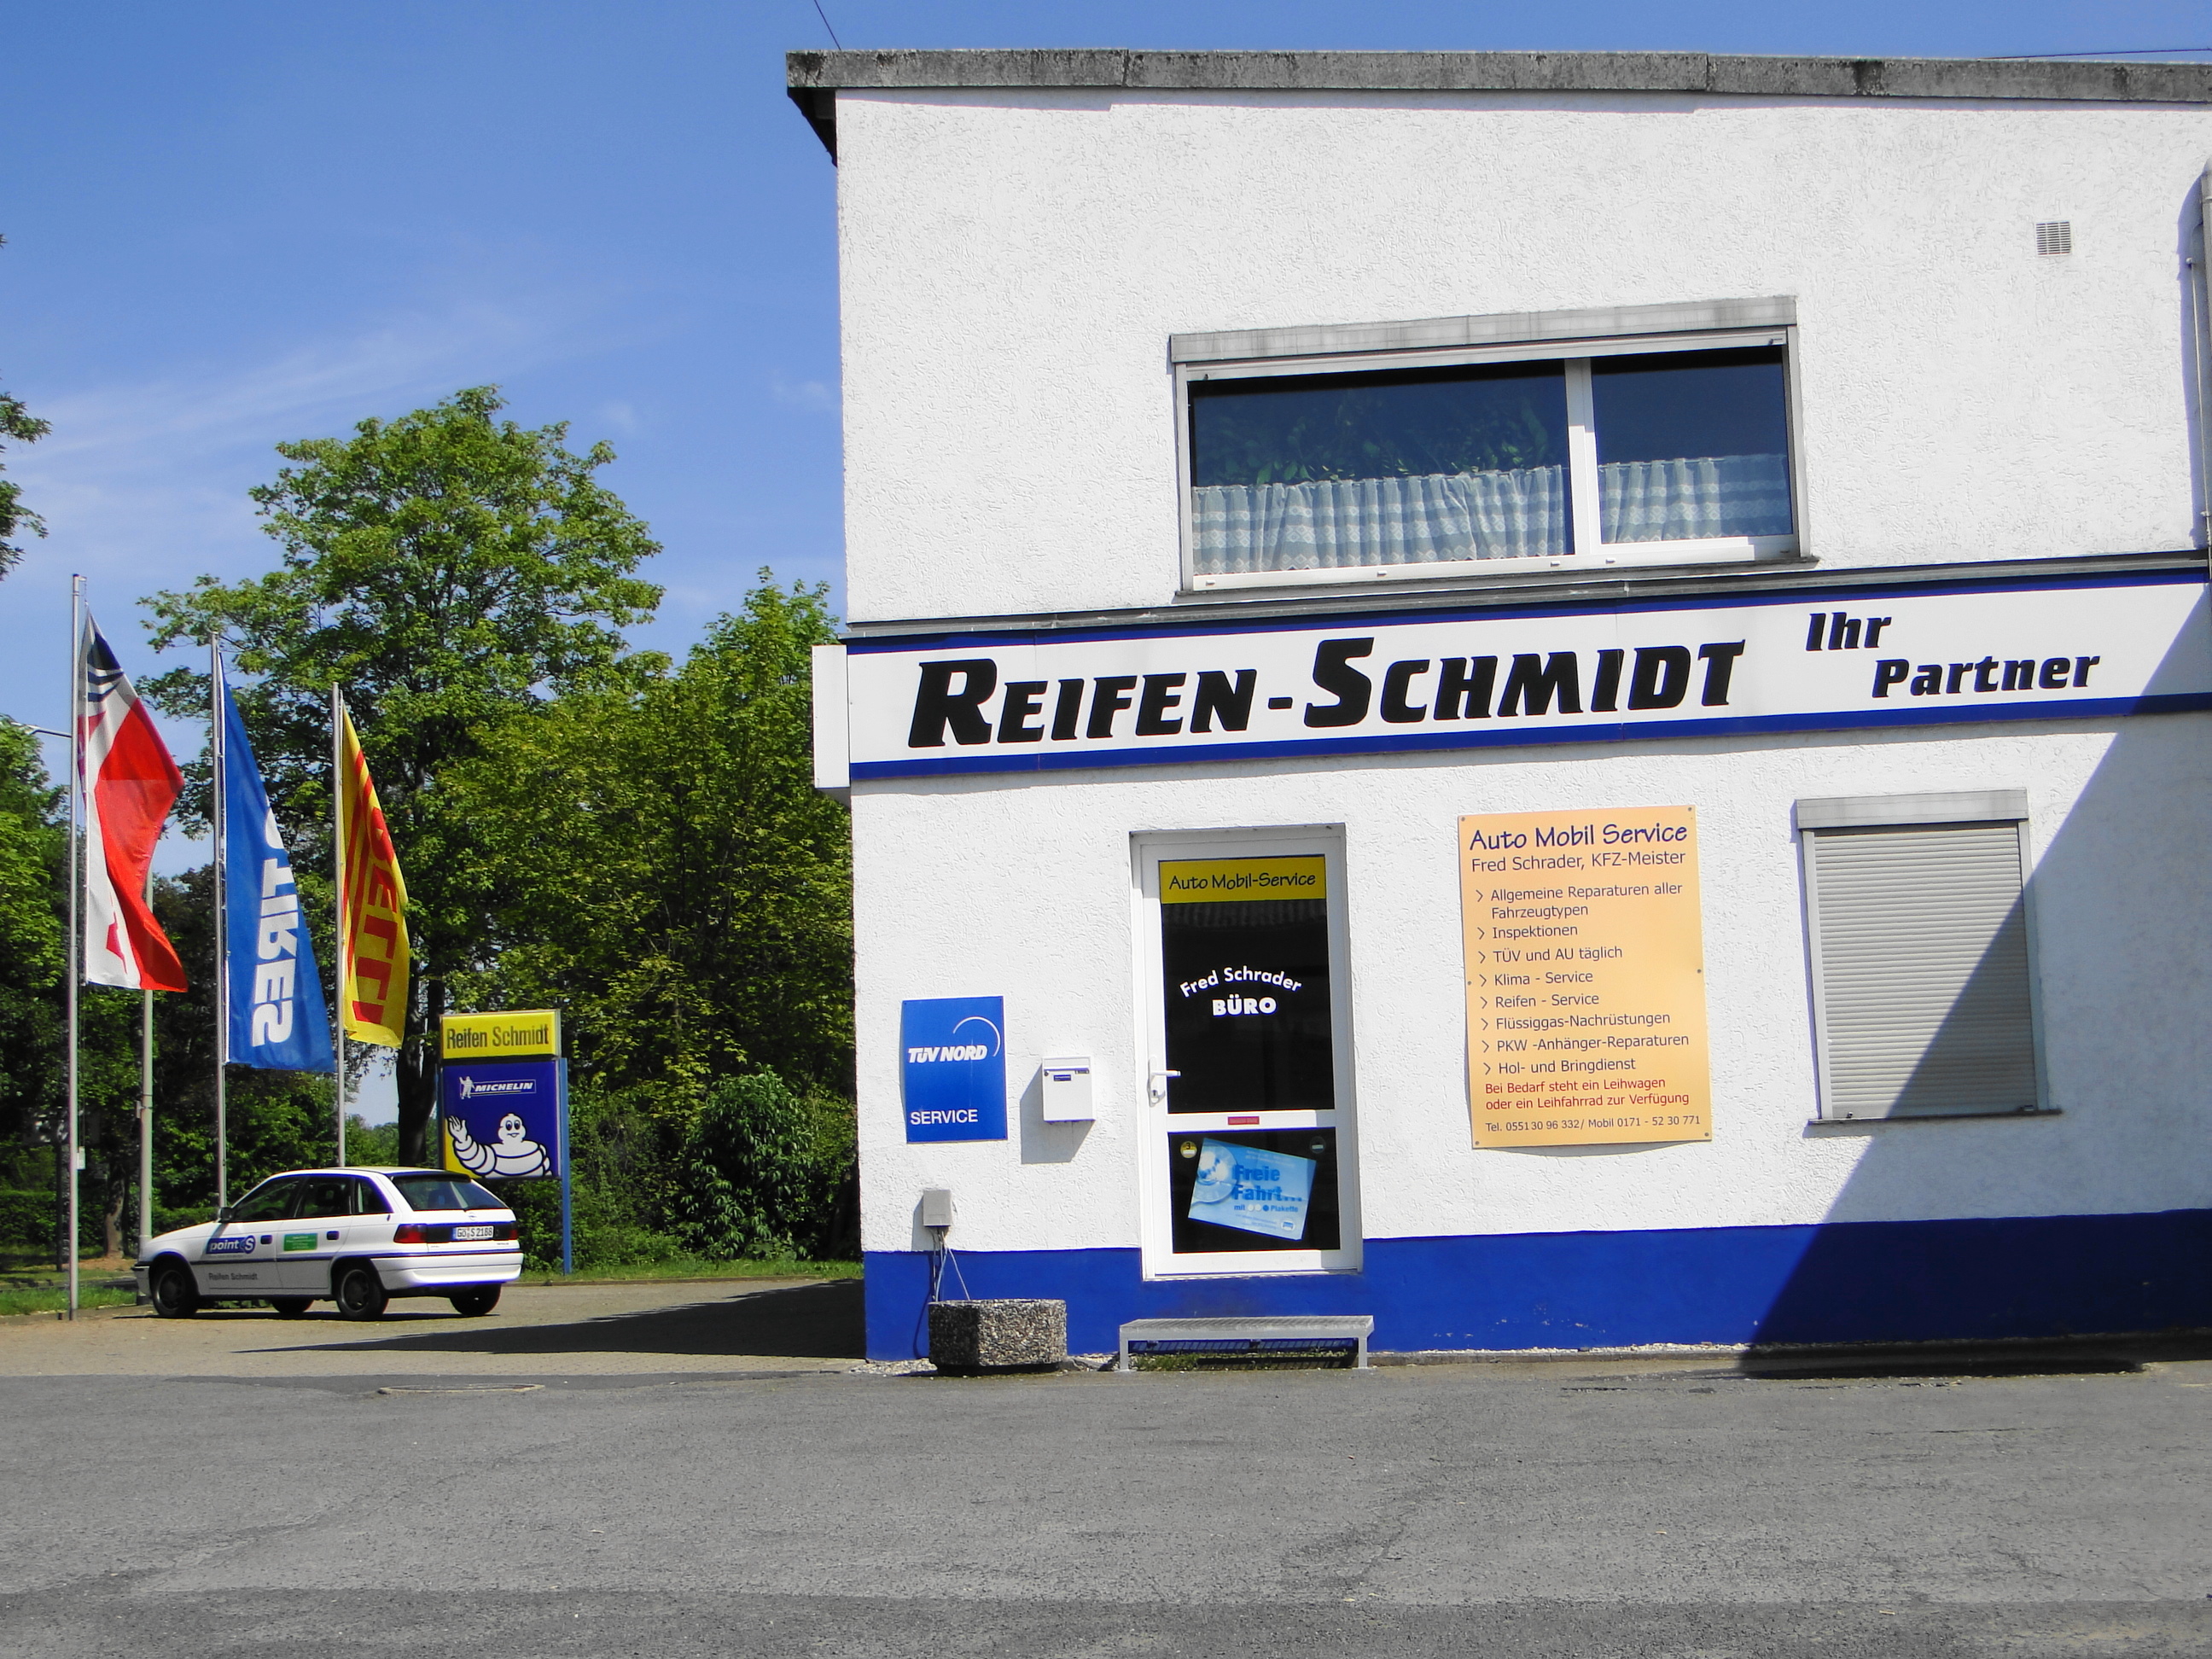 Reifenhandel Reifen Schmidt e.K. in der Wilhelm-Lambrecht-Str. 10